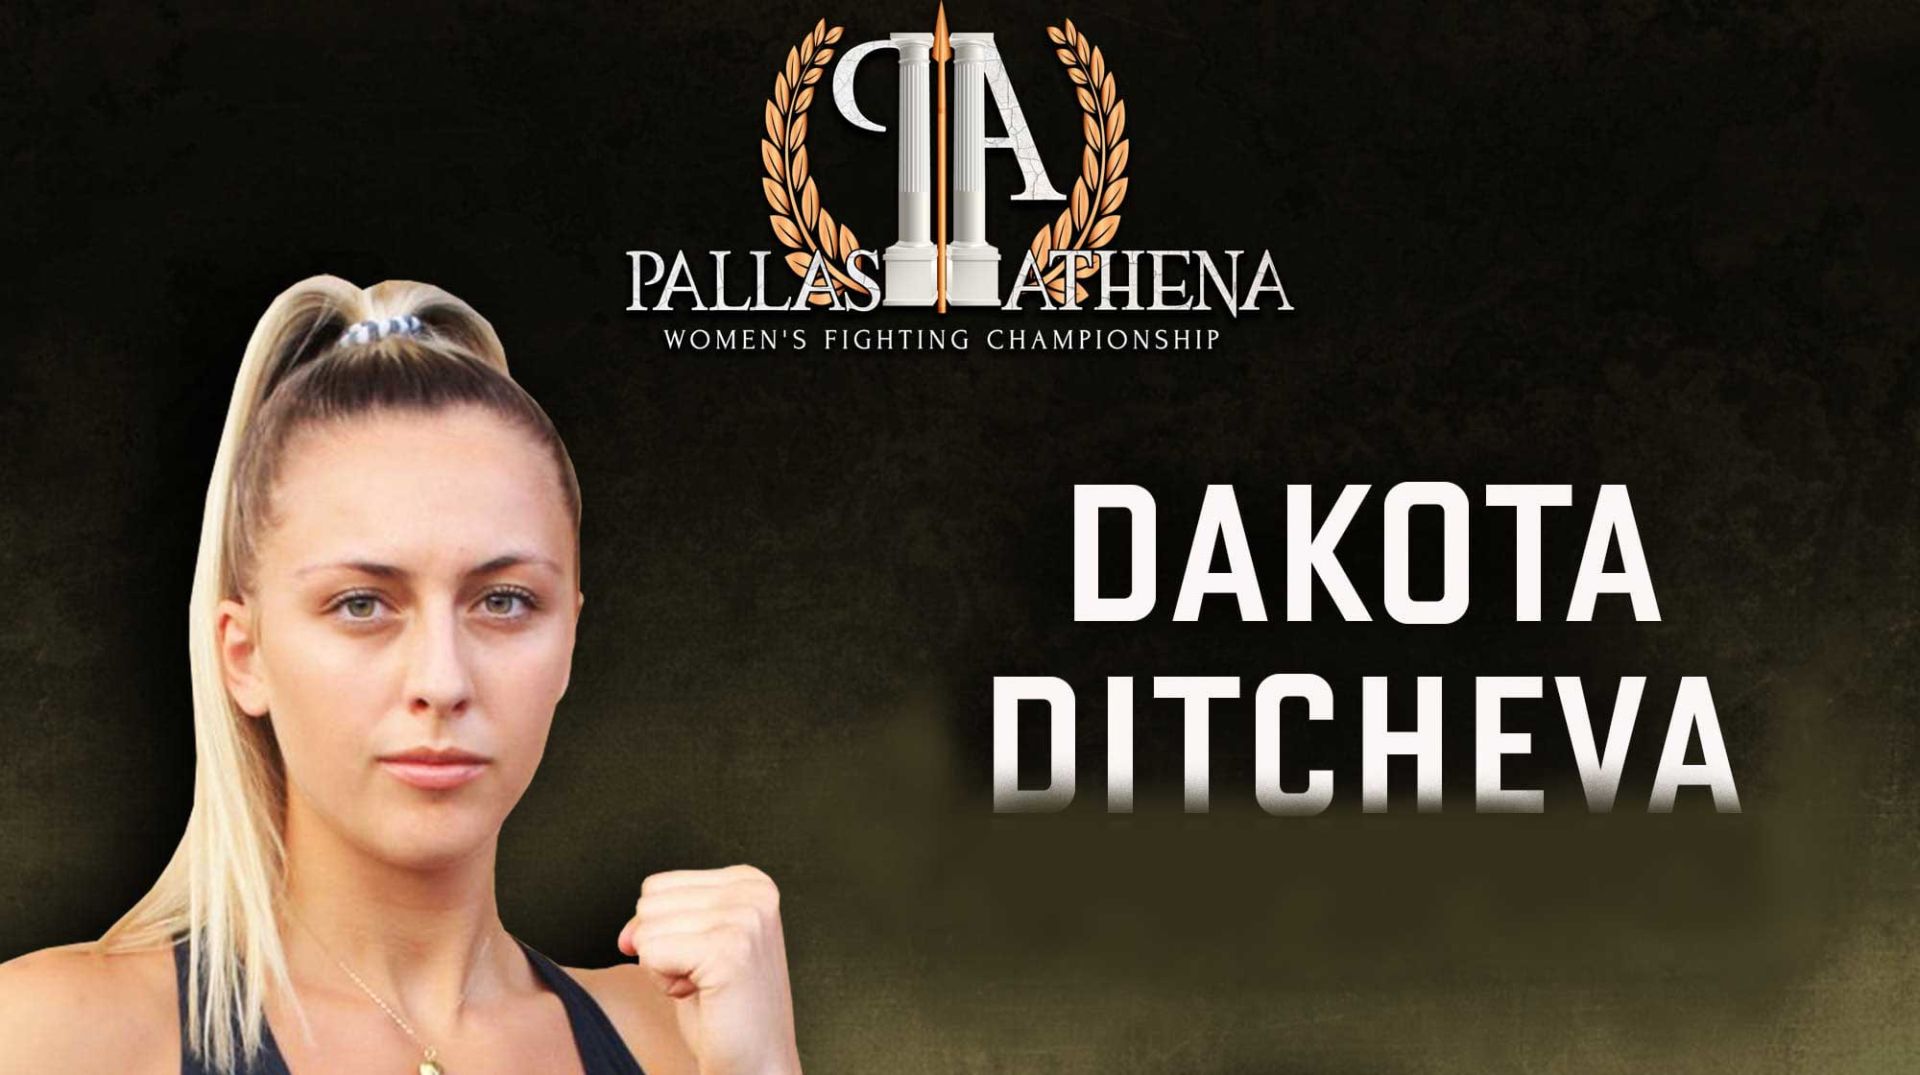 meet-the-fighter-pawfc-womens-championship-1-1920x1075.jpg